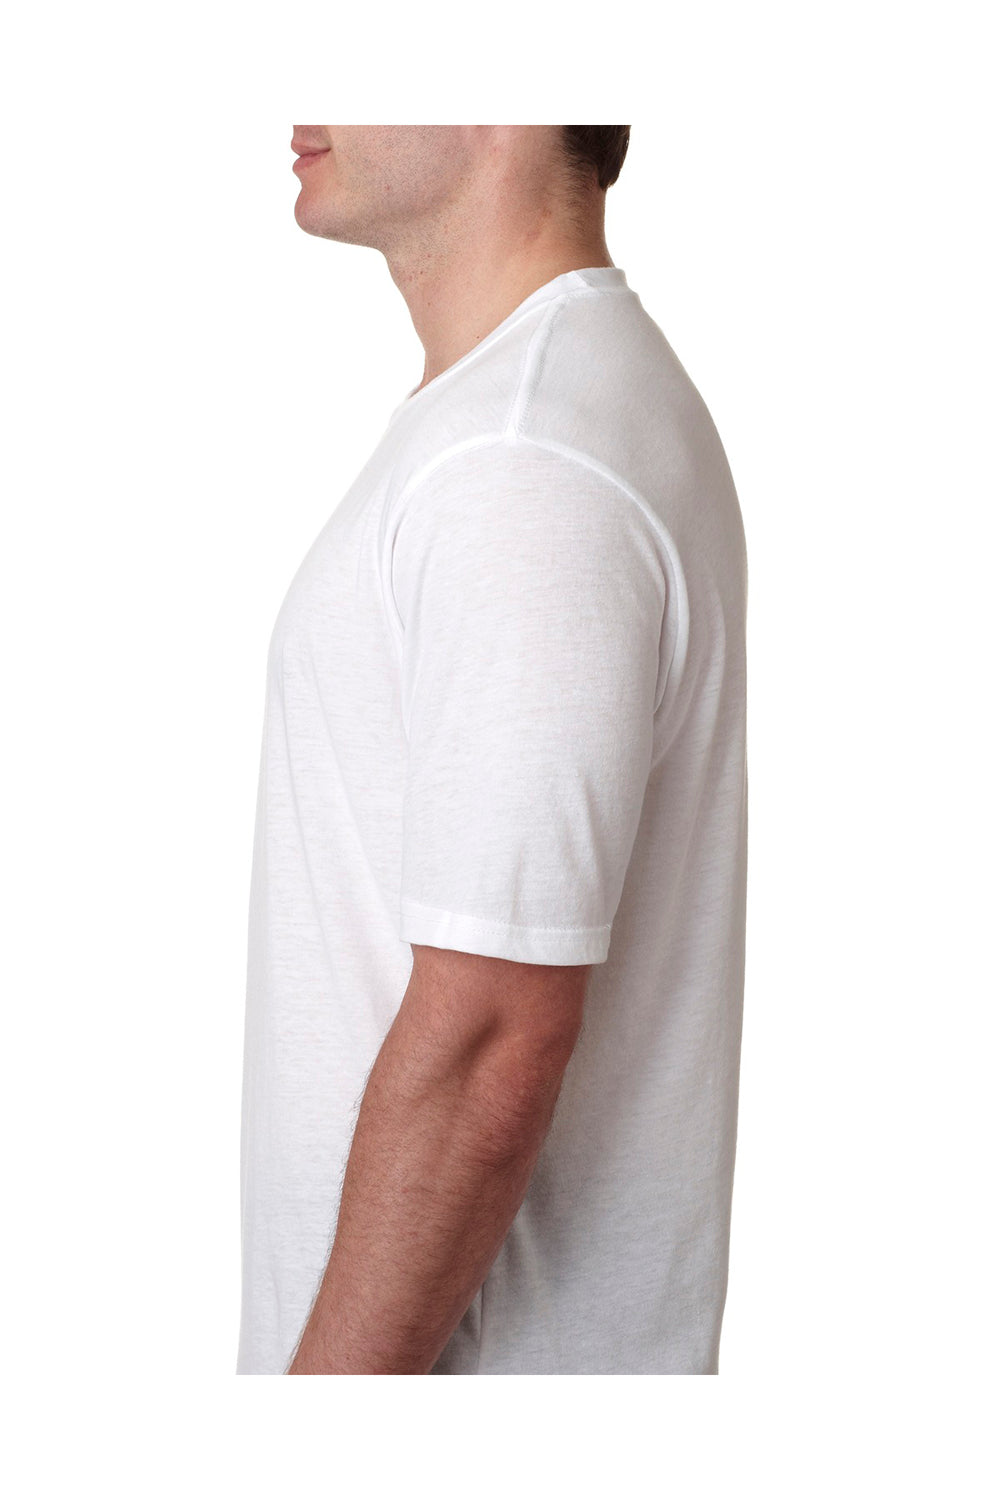 Next Level 6200 Mens Jersey Short Sleeve Crewneck T-Shirt White Side